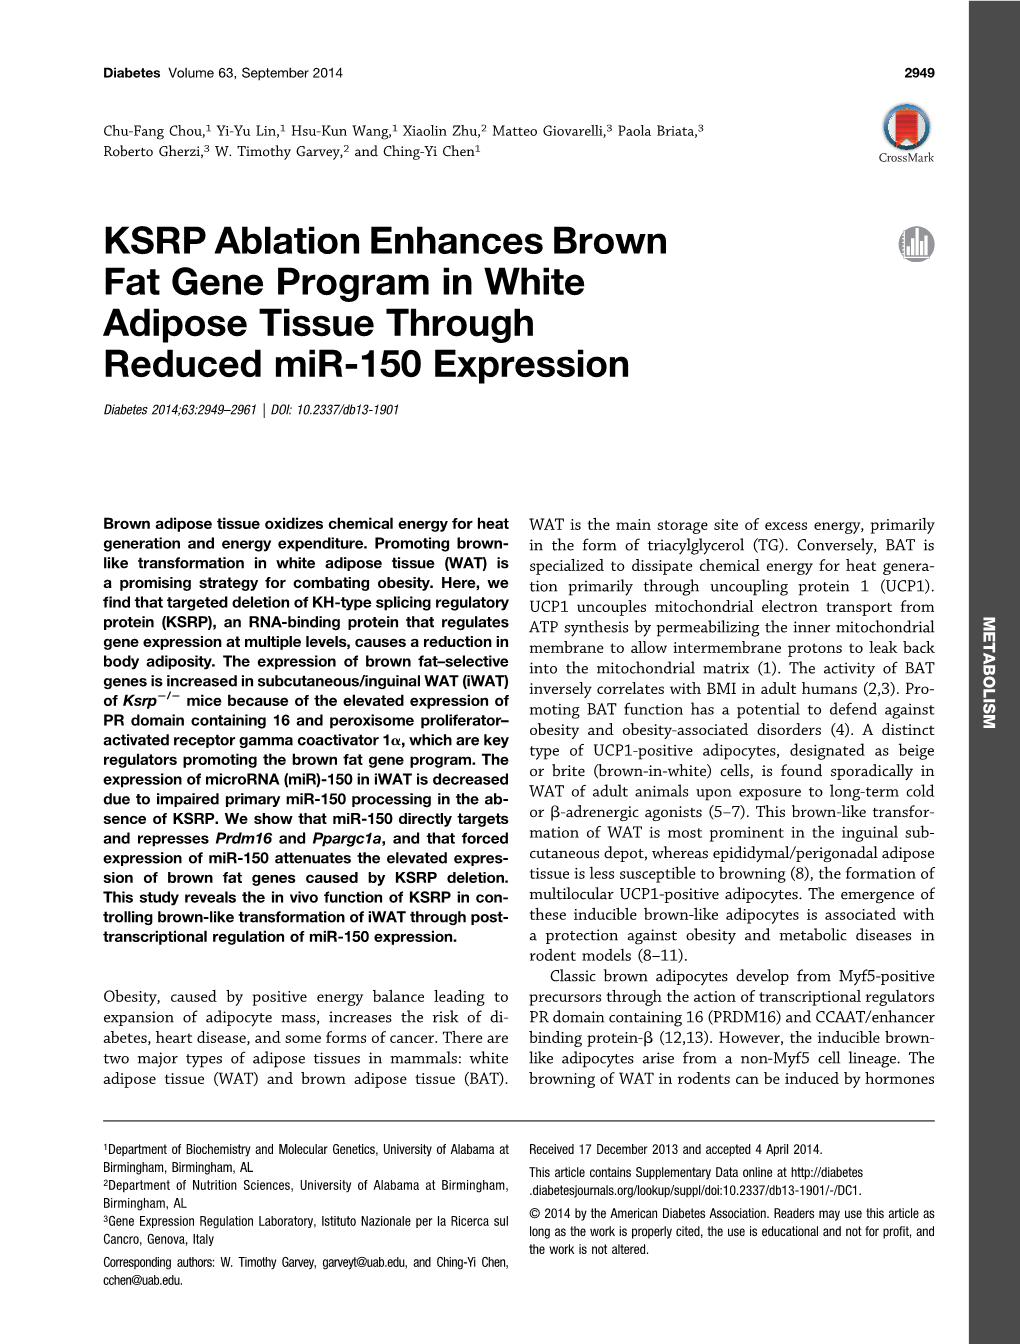 KSRP Ablation Enhances Brown Fat Gene Program in White Adipose Tissue Through Reduced Mir-150 Expression